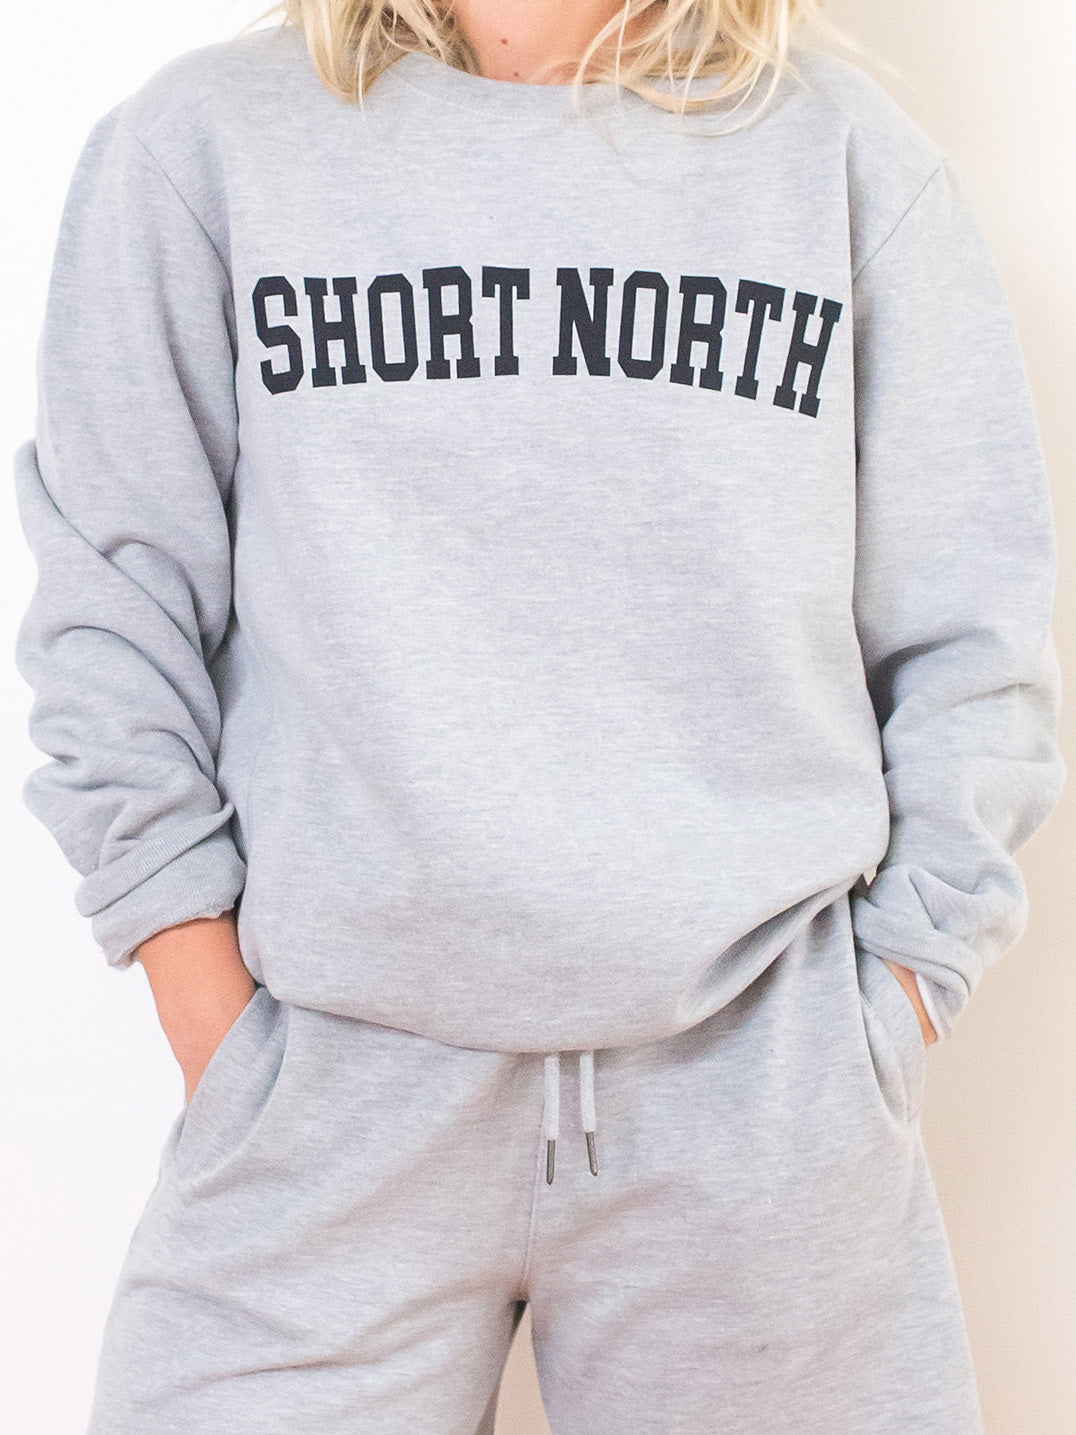 Model wearing premium heather grey crewneck sweatshirt with Short North Columbus, Ohio graphic at front